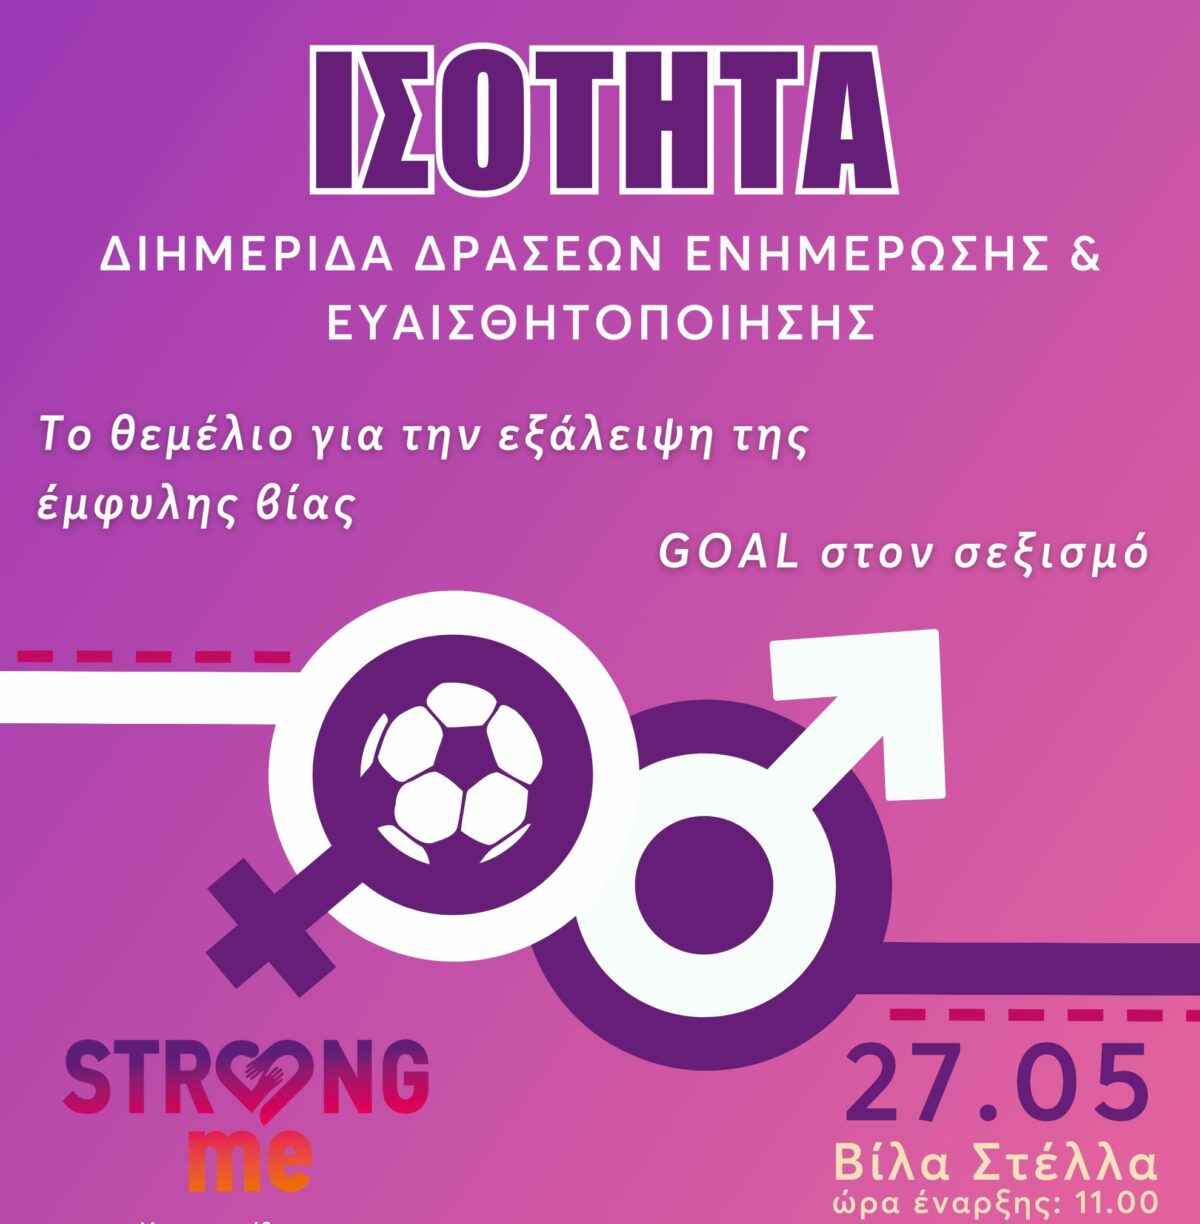 Goal στον Σεξισμό: Διήμερο δράσεων για την ισότητα και την εξάλειψη της έμφυλης βίας από τον Δήμο Ηρακλείου Αττικής